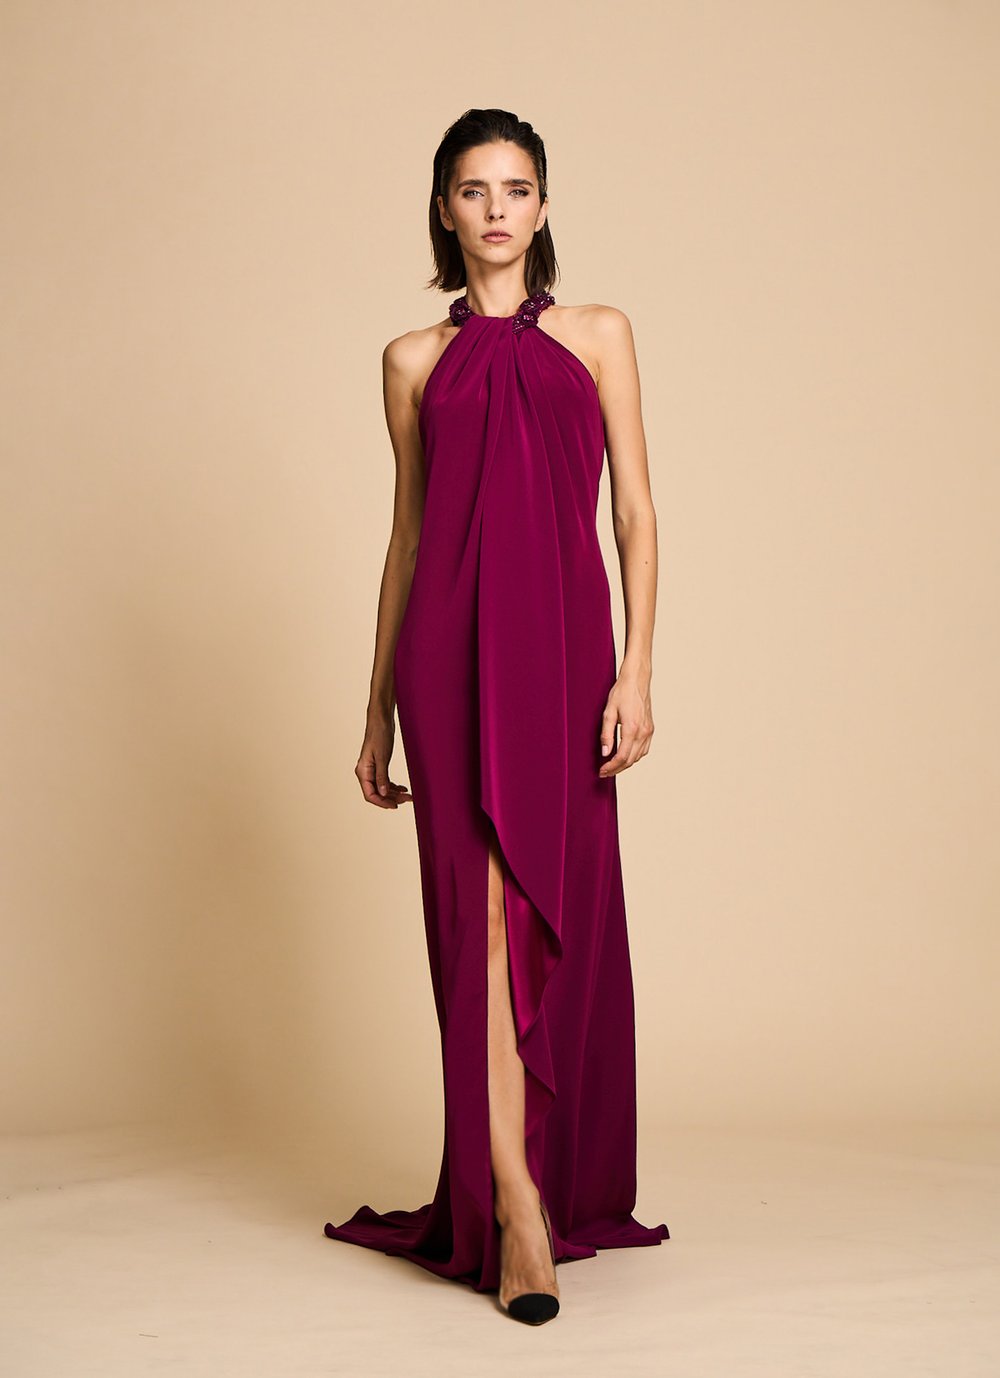 Elegant VERDAVAINNE Crepe Toga Evening Gown with High Slit and Beaded Neckline